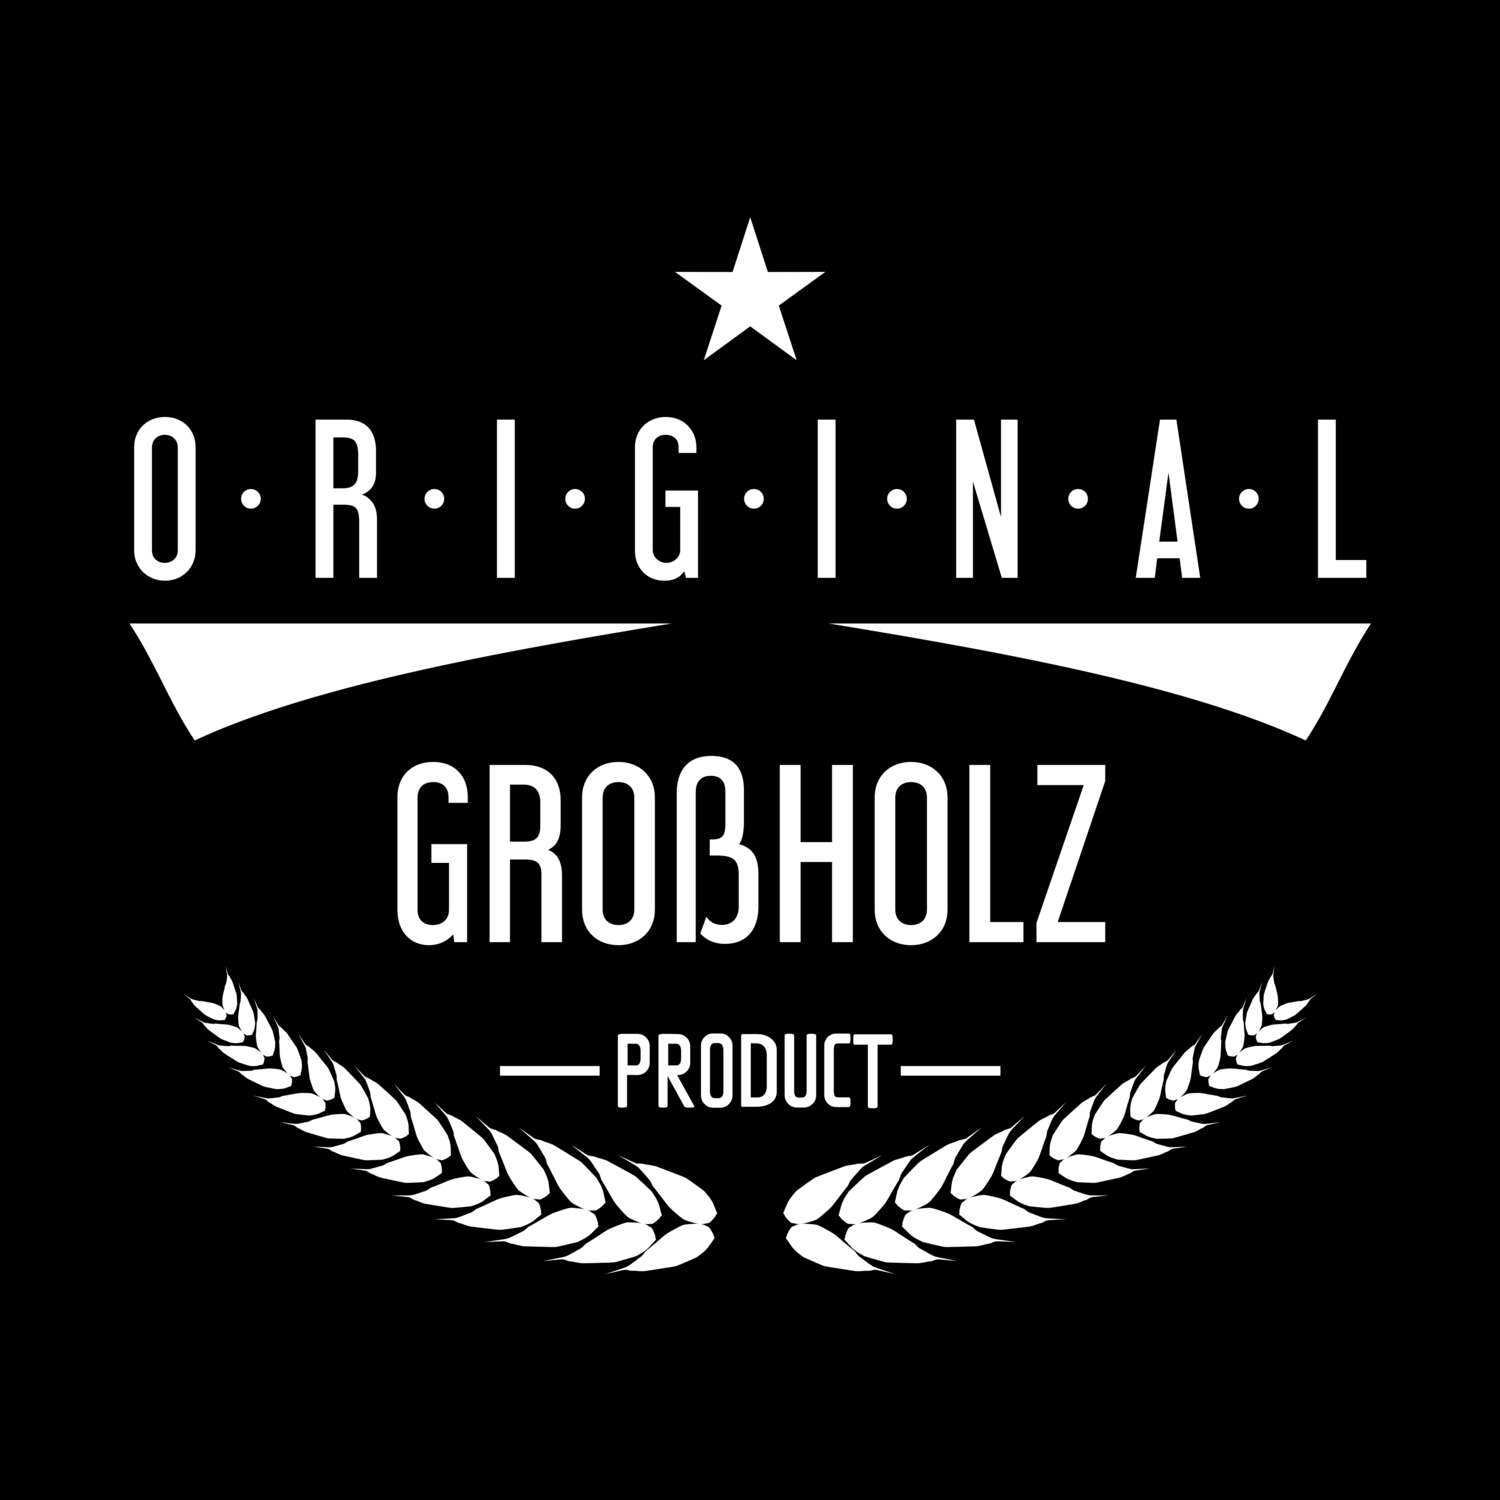 Großholz T-Shirt »Original Product«